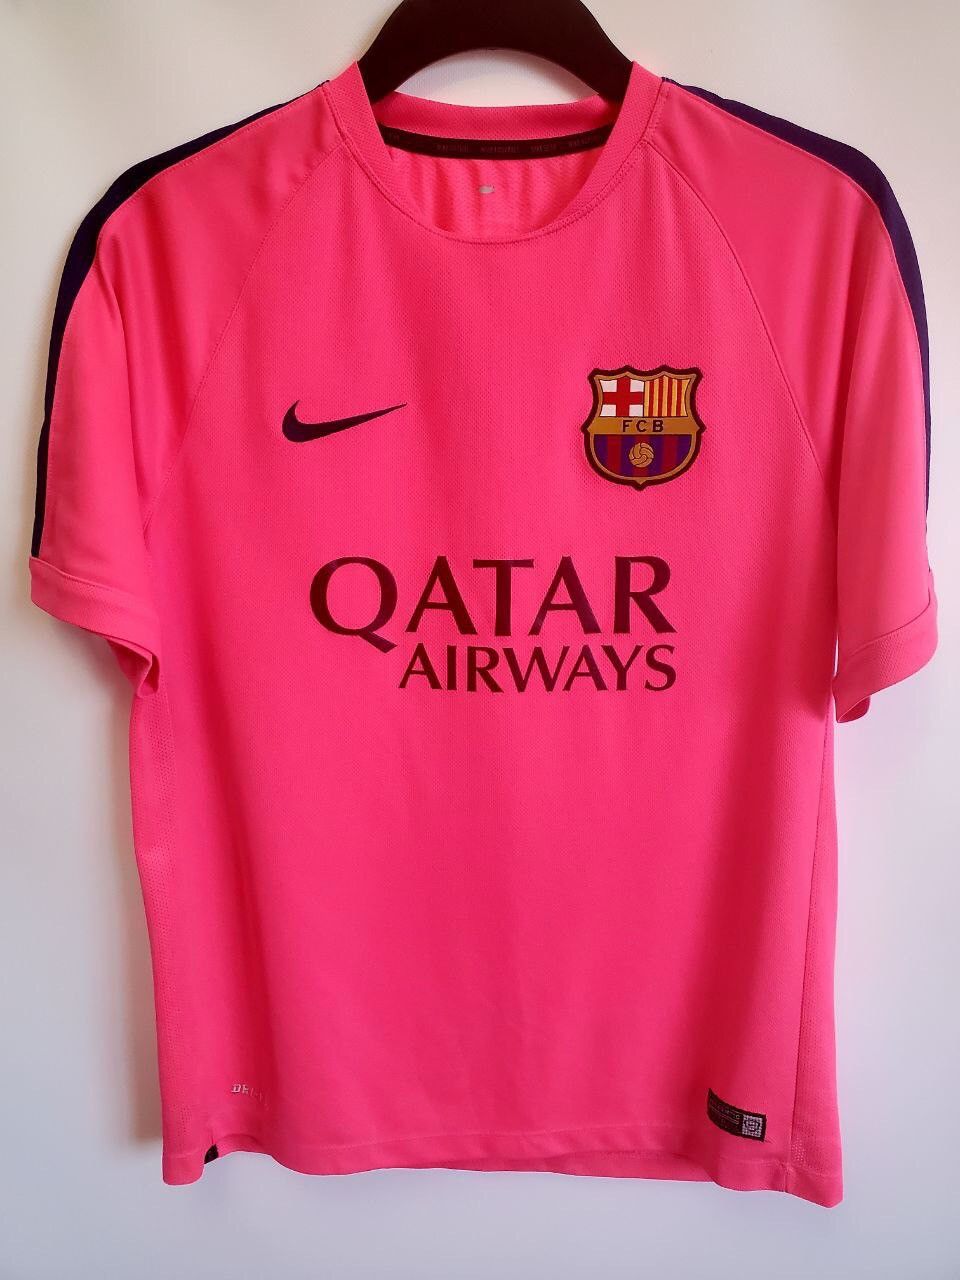 Nike FC Barcelona Training Jersey Football Shirt Nike Mens Size L Size US L / EU 52-54 / 3 - 1 Preview